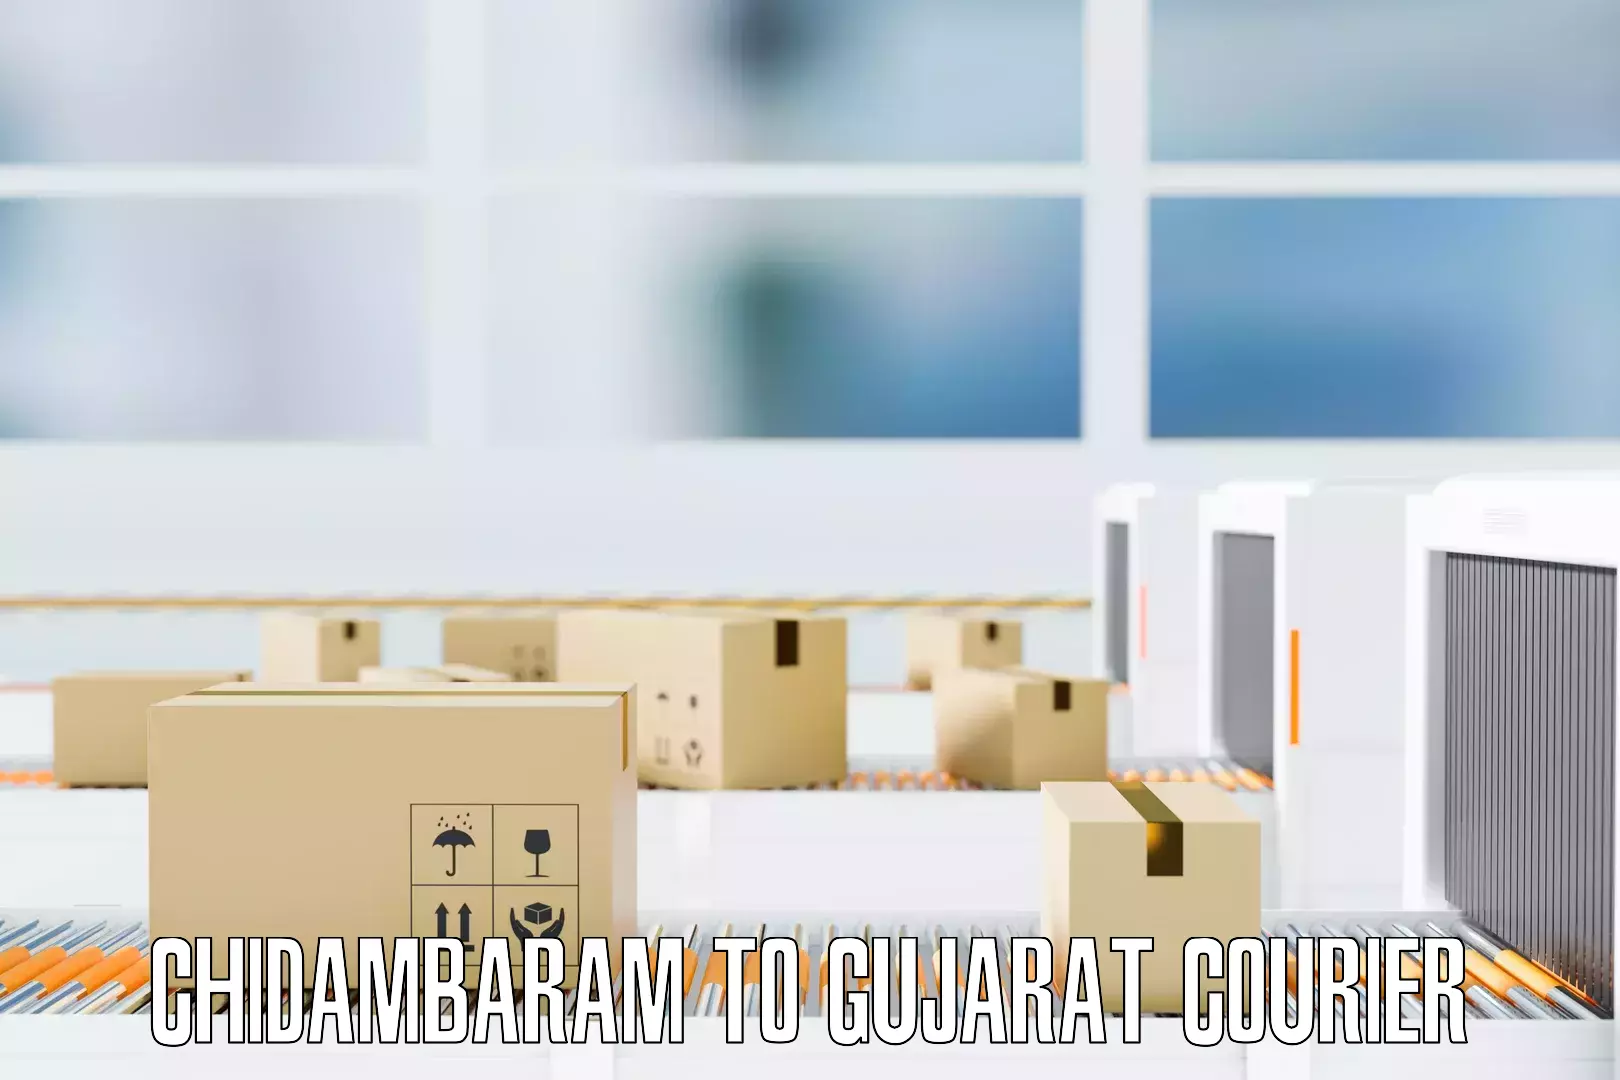 Professional moving company Chidambaram to Gujarat